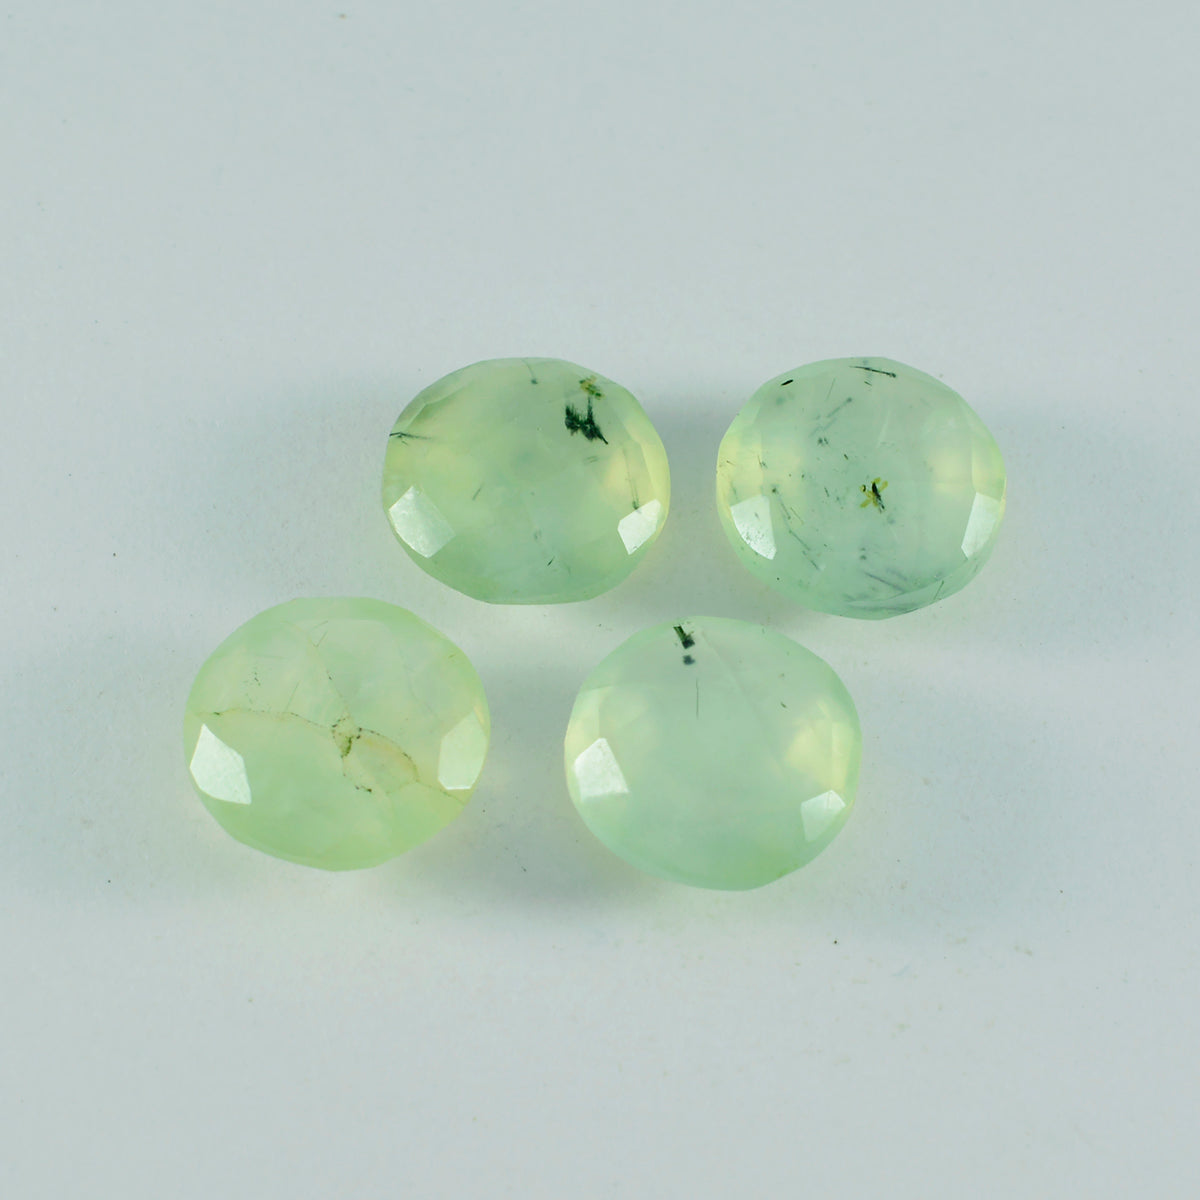 riyogems 1pc グリーン プレナイト ファセット 15x15 mm ラウンド形状の美しい品質のルース宝石